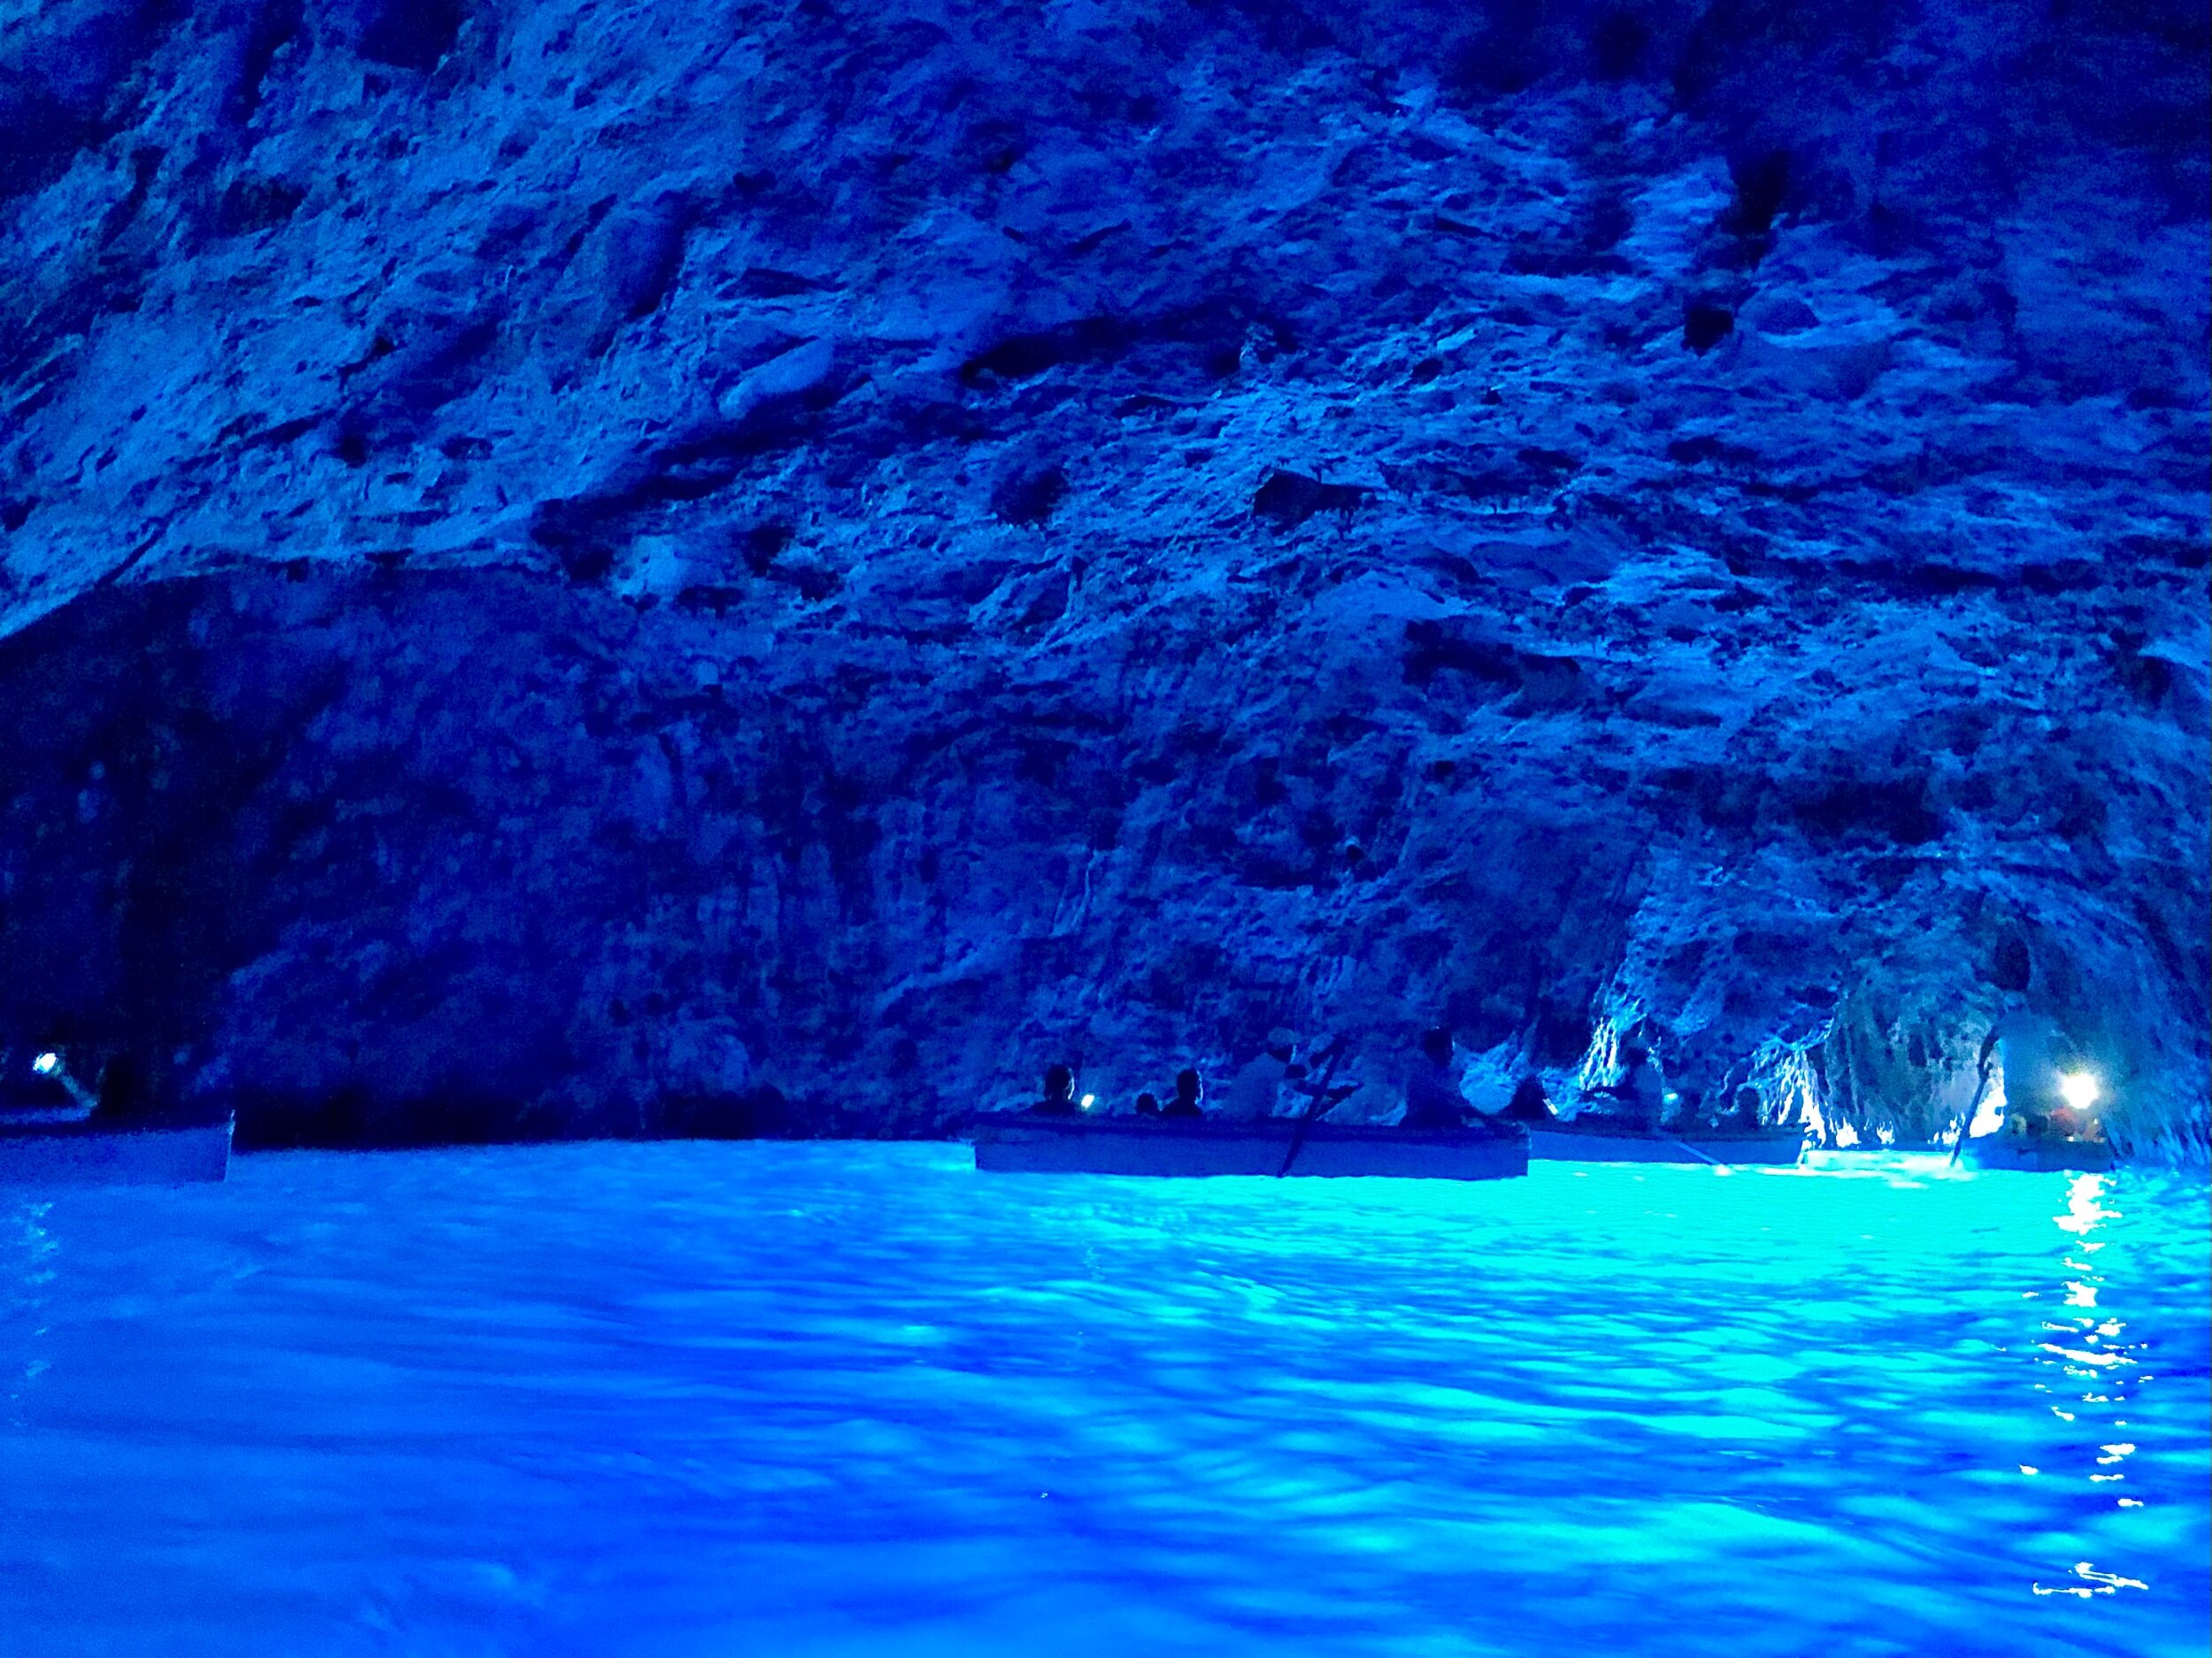 How to Enter the Capri Blue Grotto in Italy - Capri (Grotta